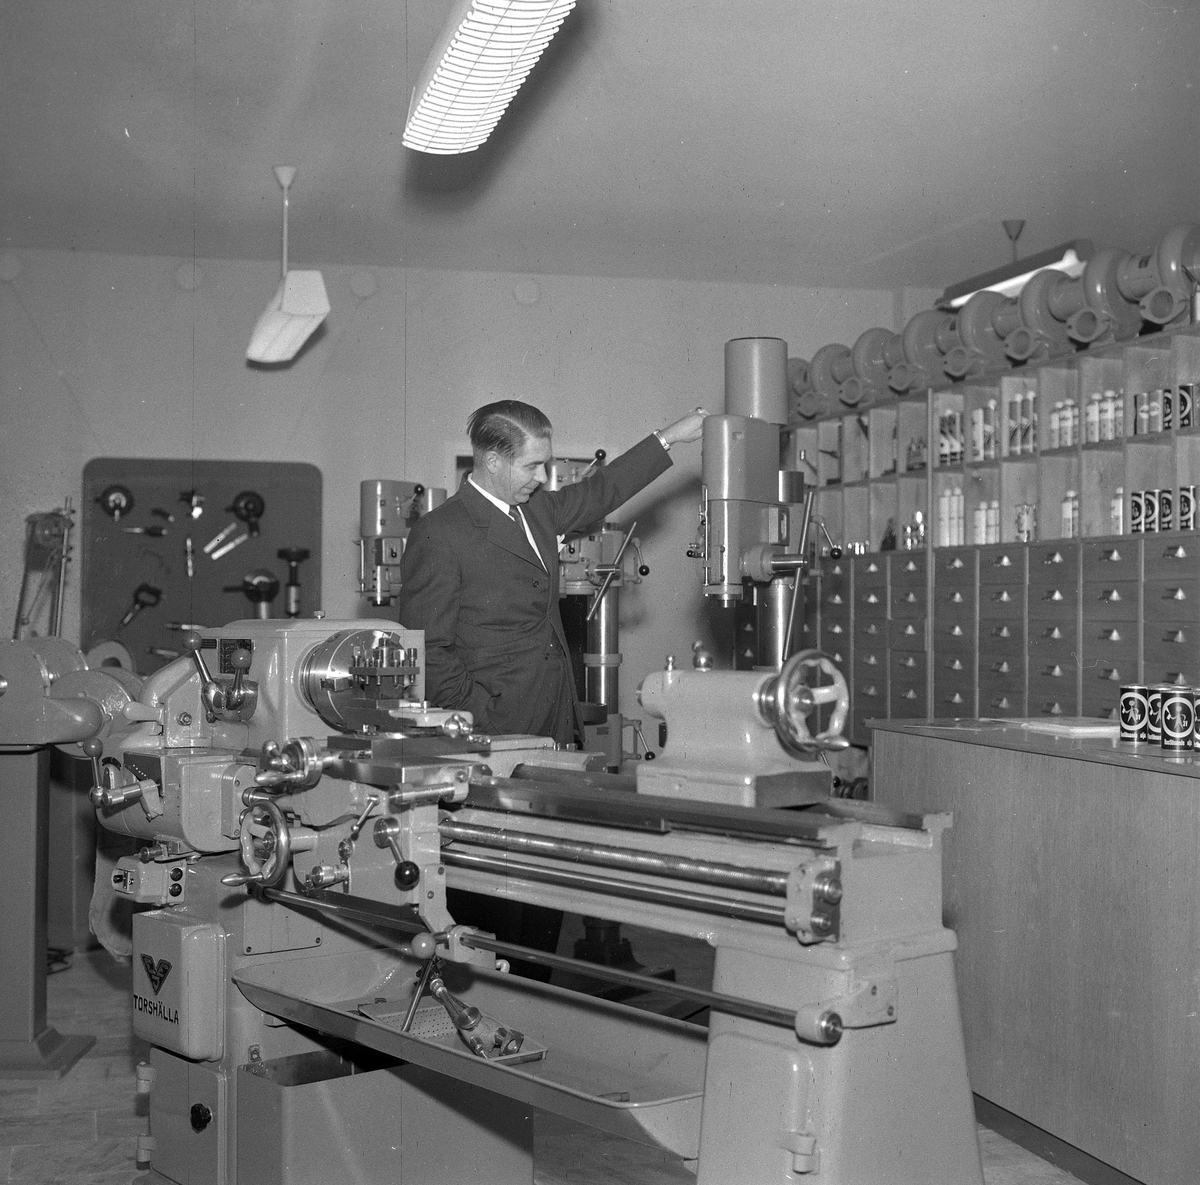 Maskinfirma på Rudbecksgatan.
November 1956.